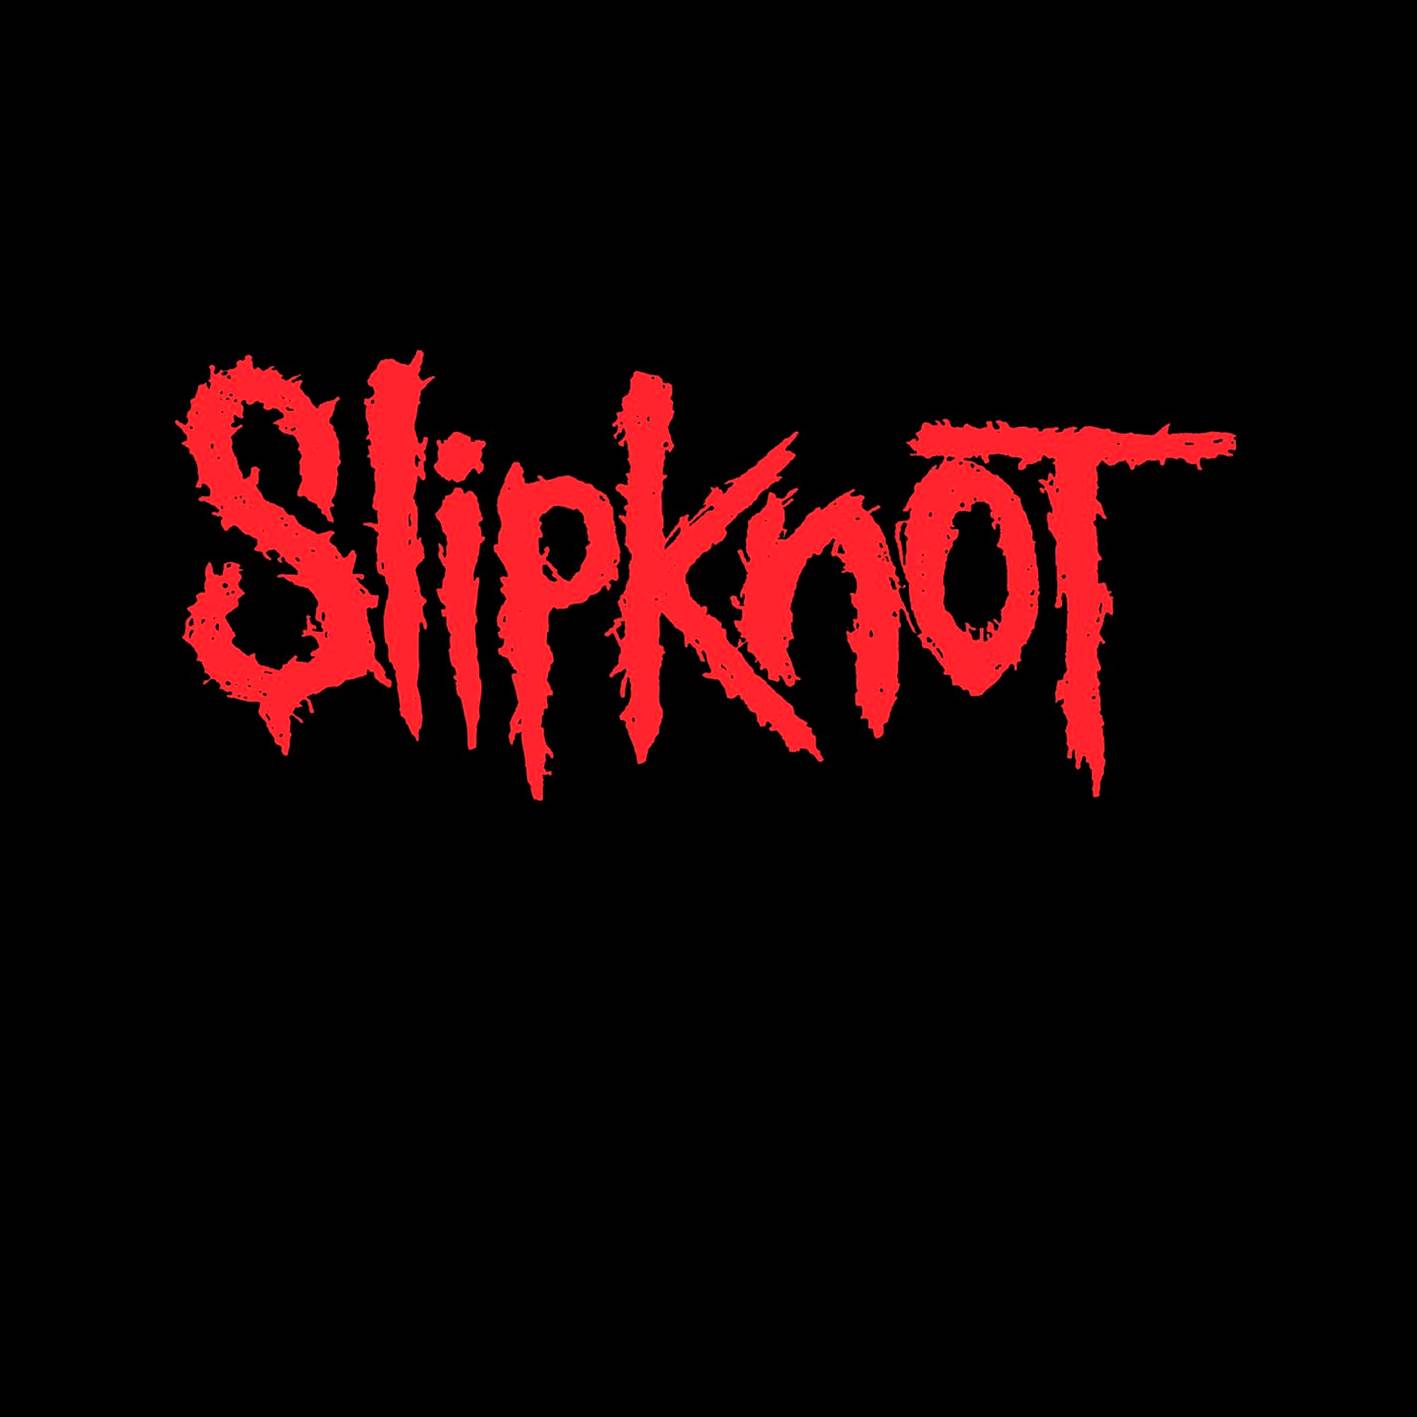 Slipknot - The Studio Album Collection (2014) [HDTracks FLAC 24bit/96kHz]